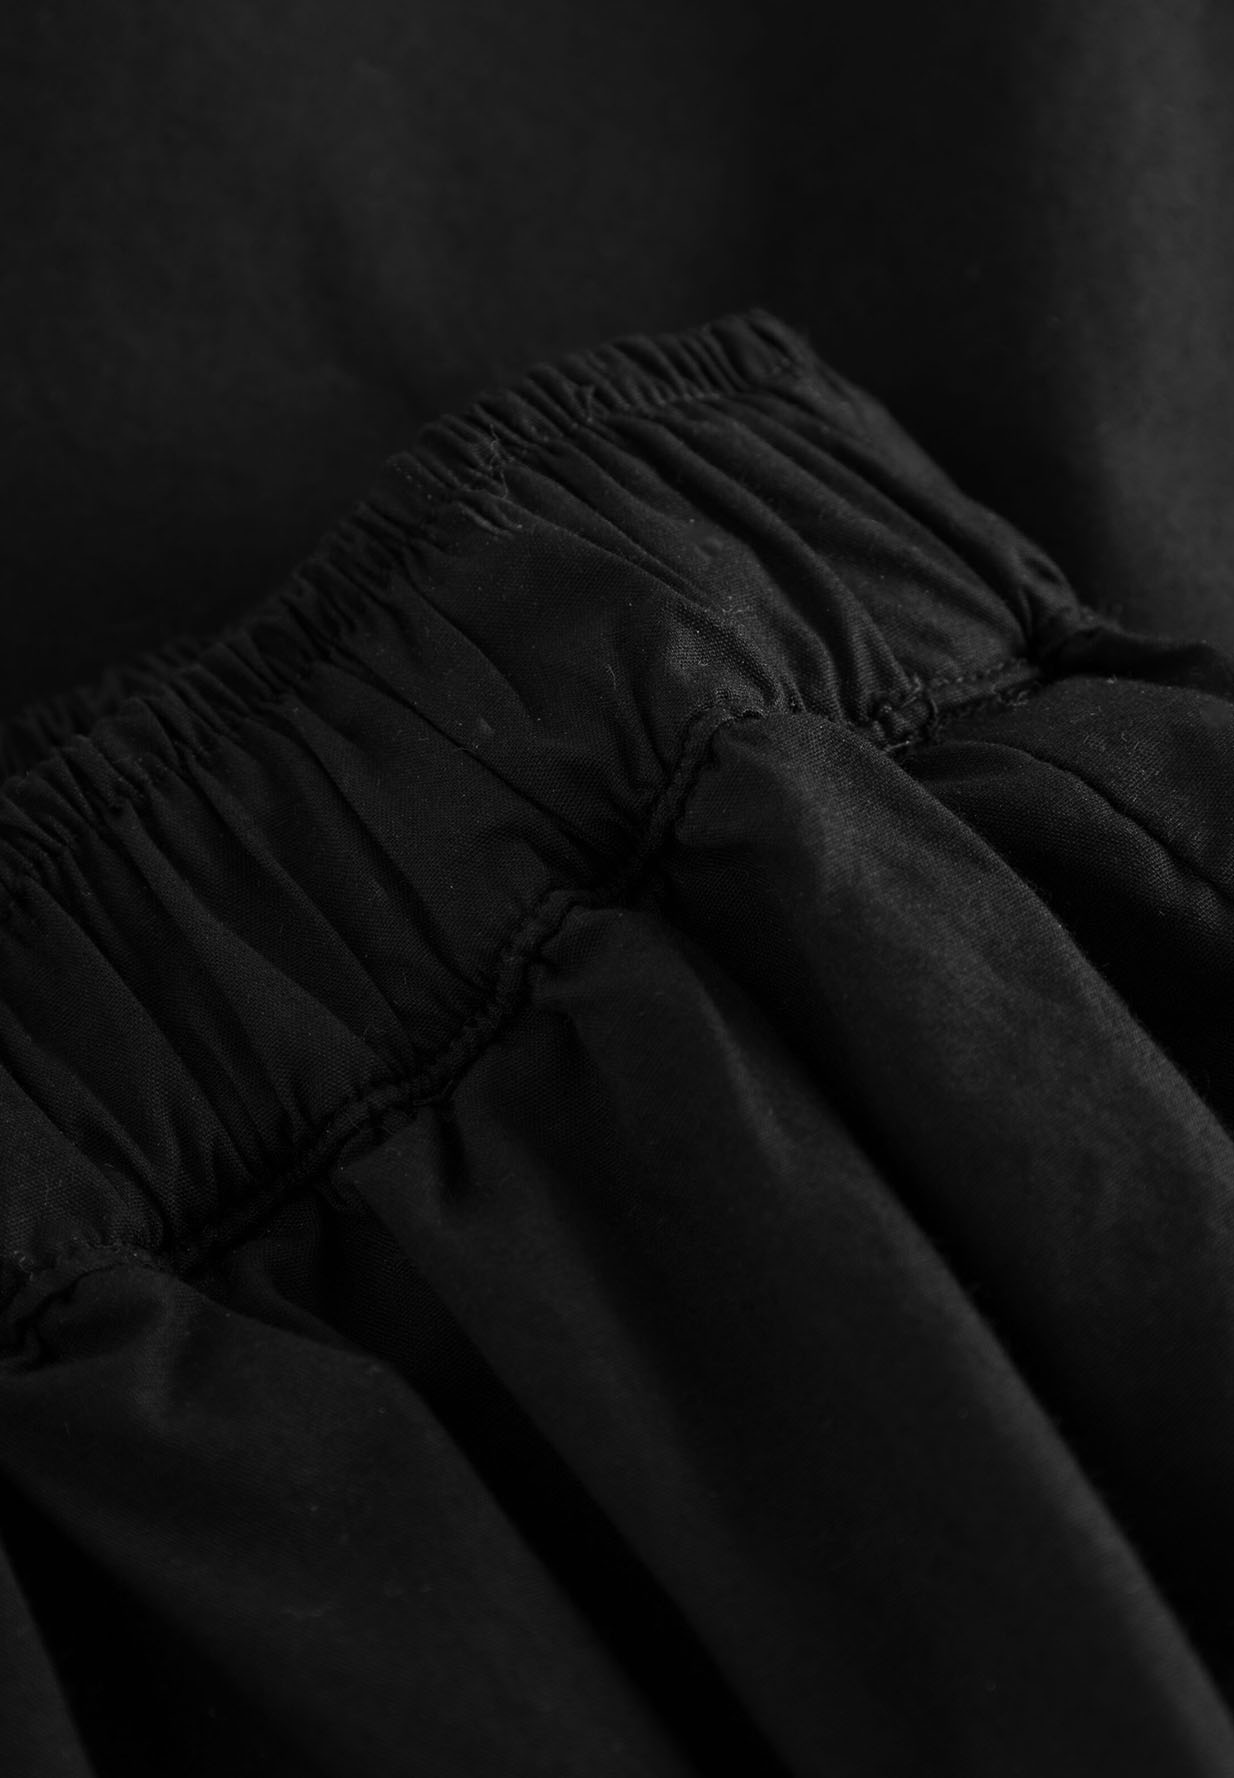 KNOWLEDGECOTTON APPAREL Poplin Elastic Waist Skirt black jet XS